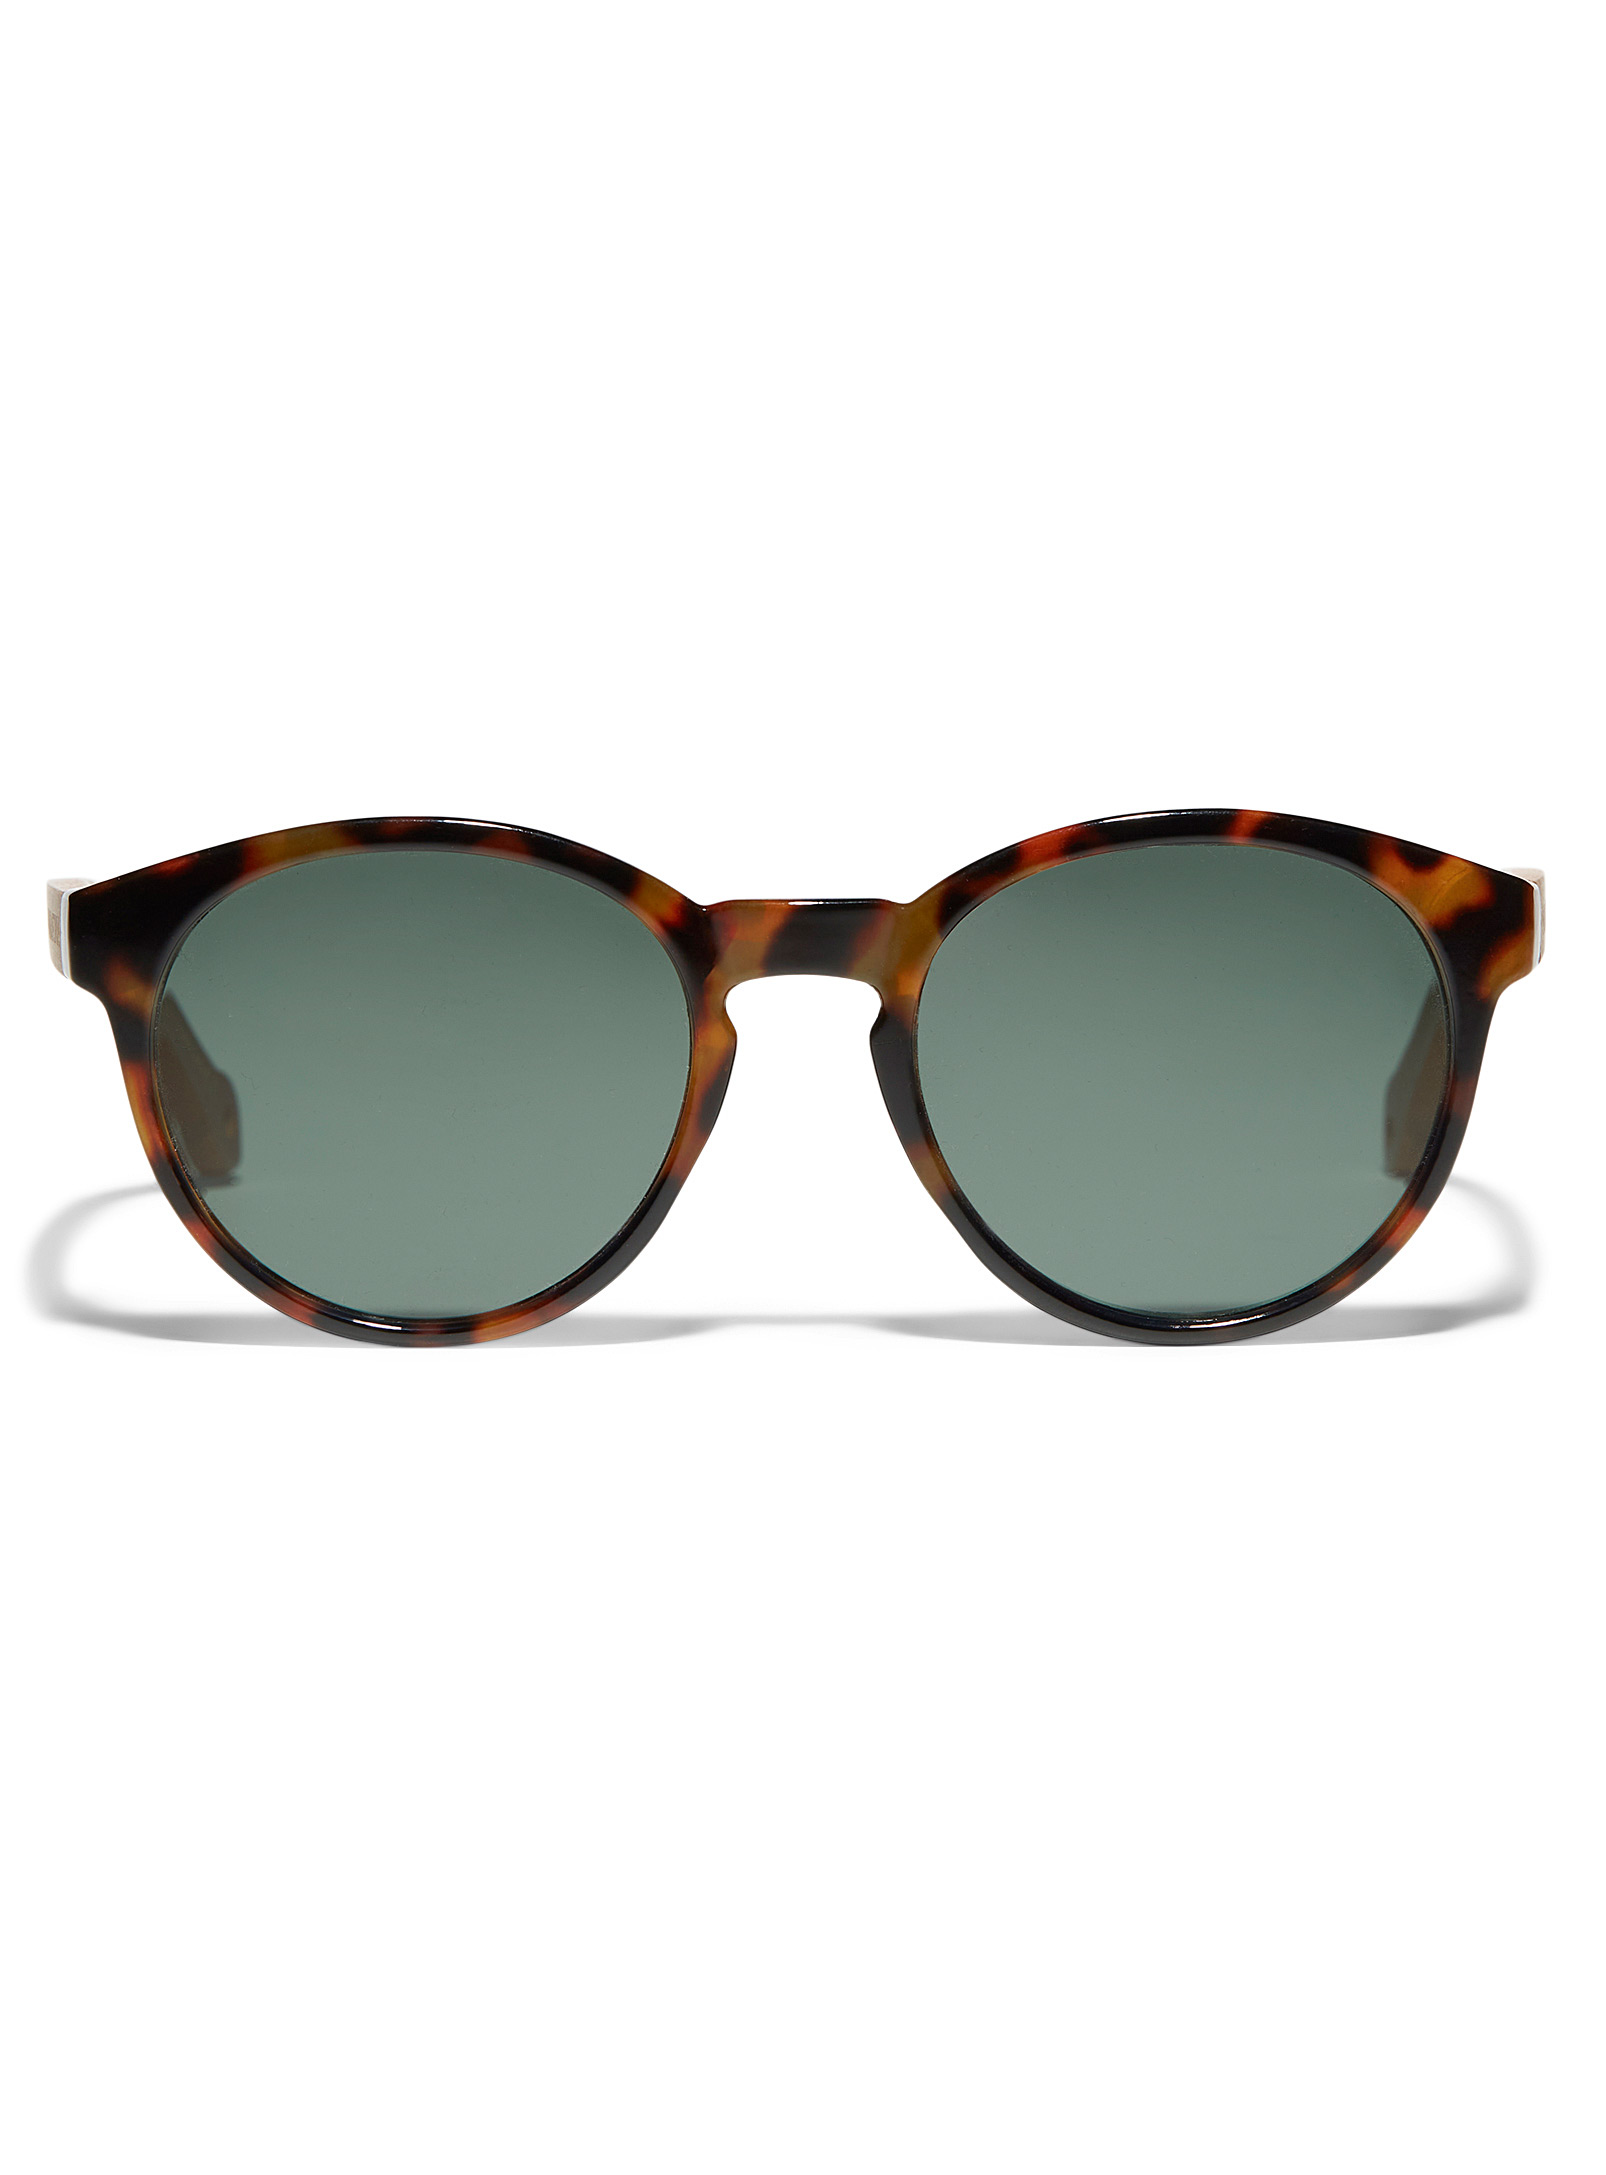 Parafina - Women's Costa round sunglasses